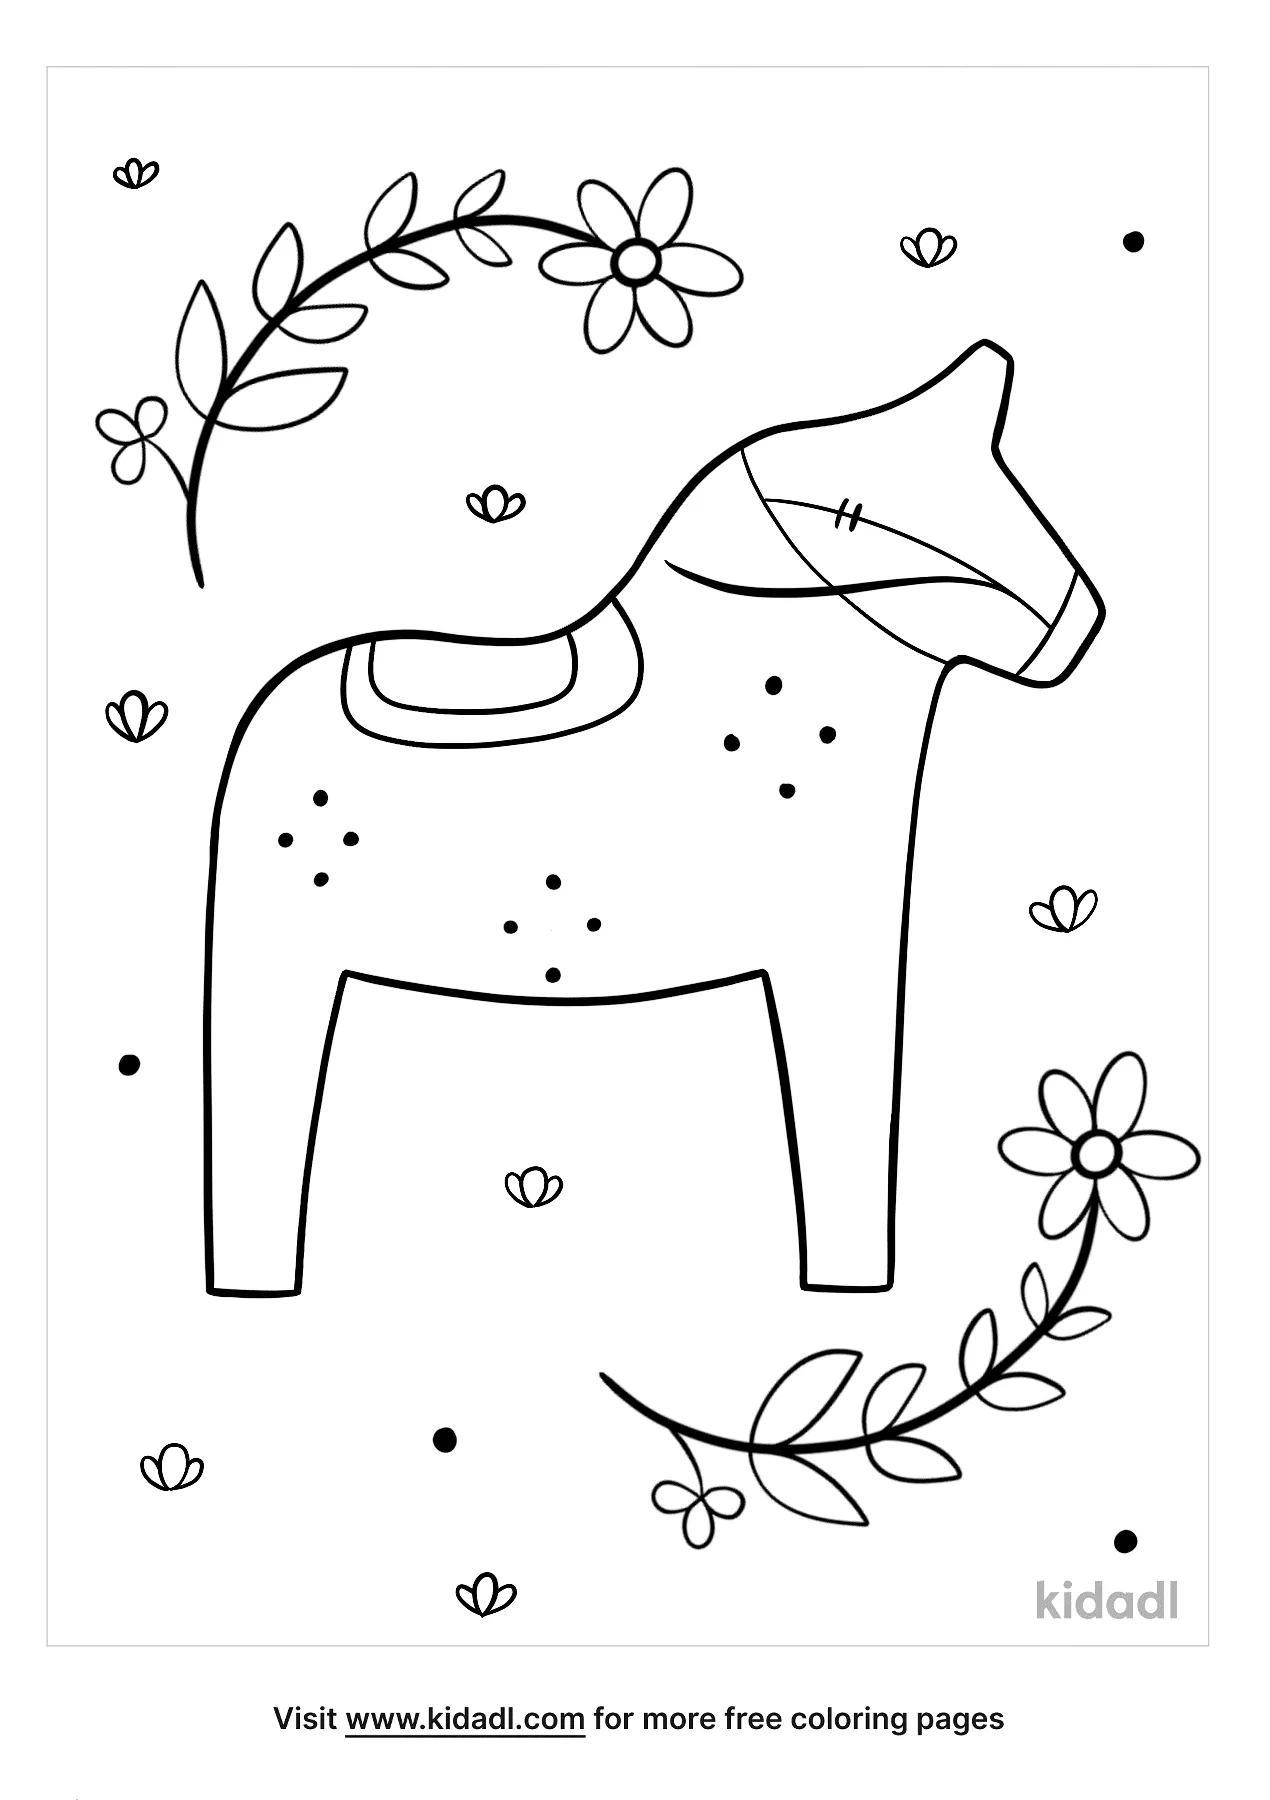 Free dala horse coloring page coloring page printables